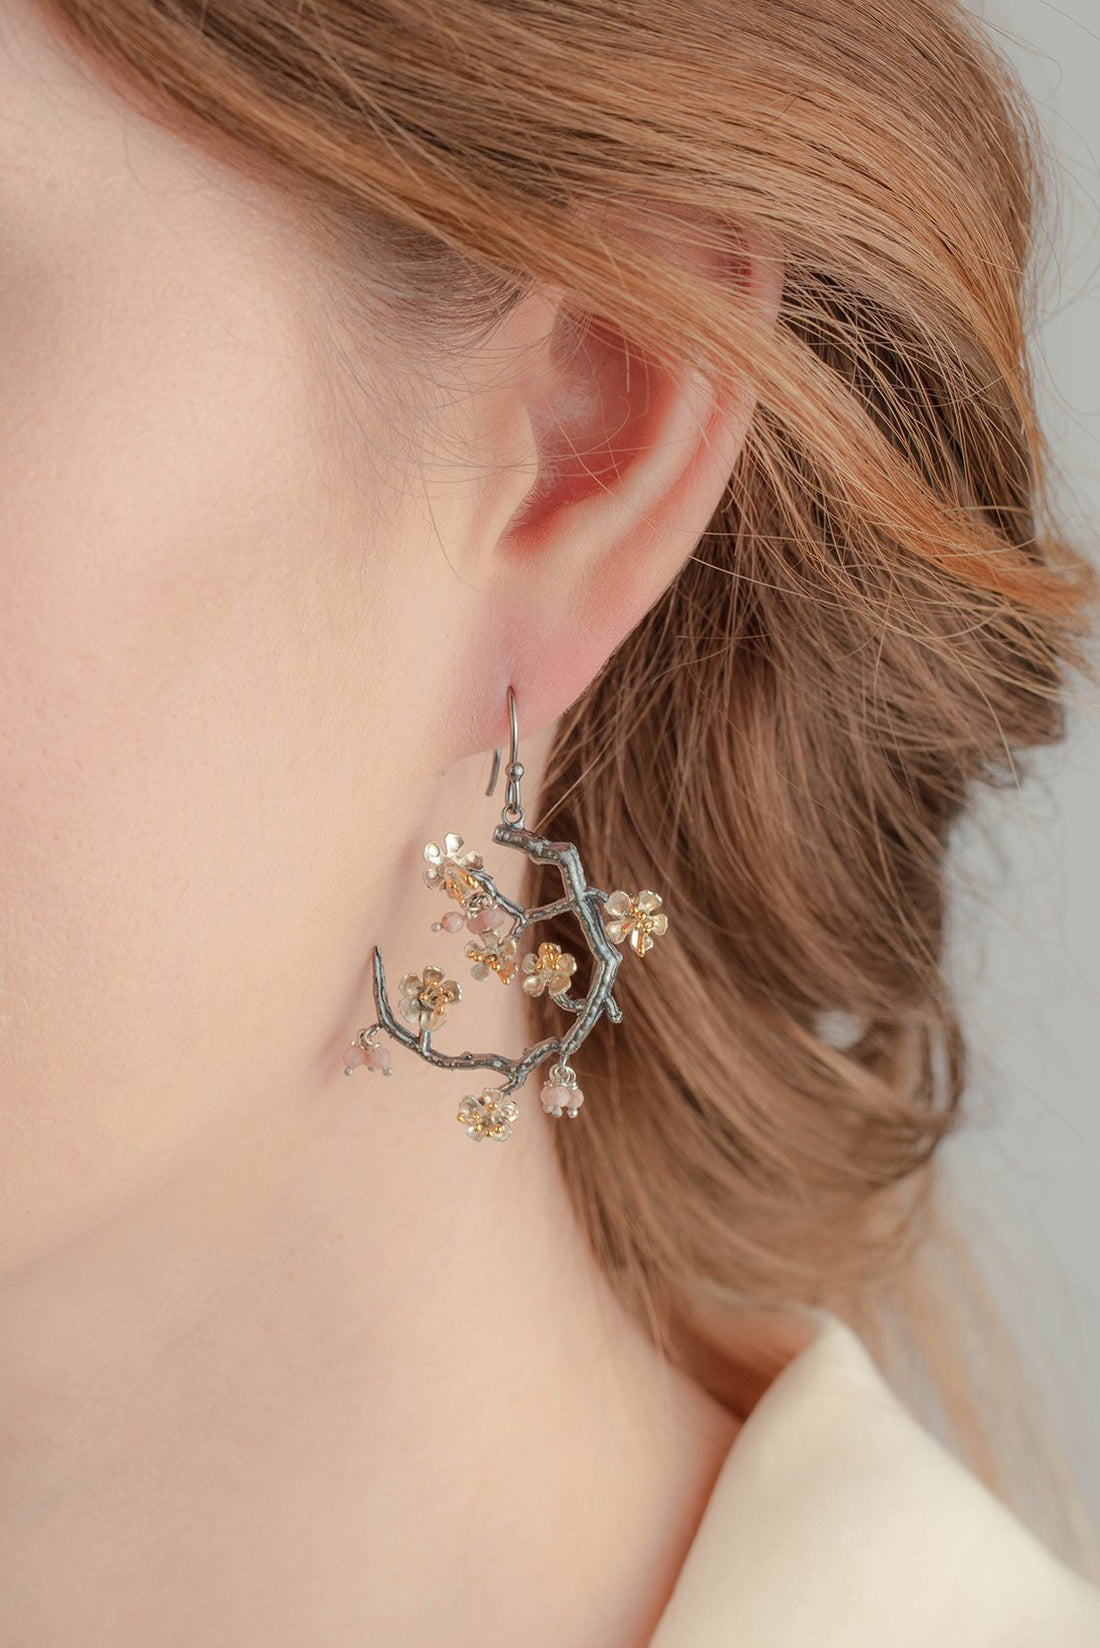 Almond Blossom Statement Earrings